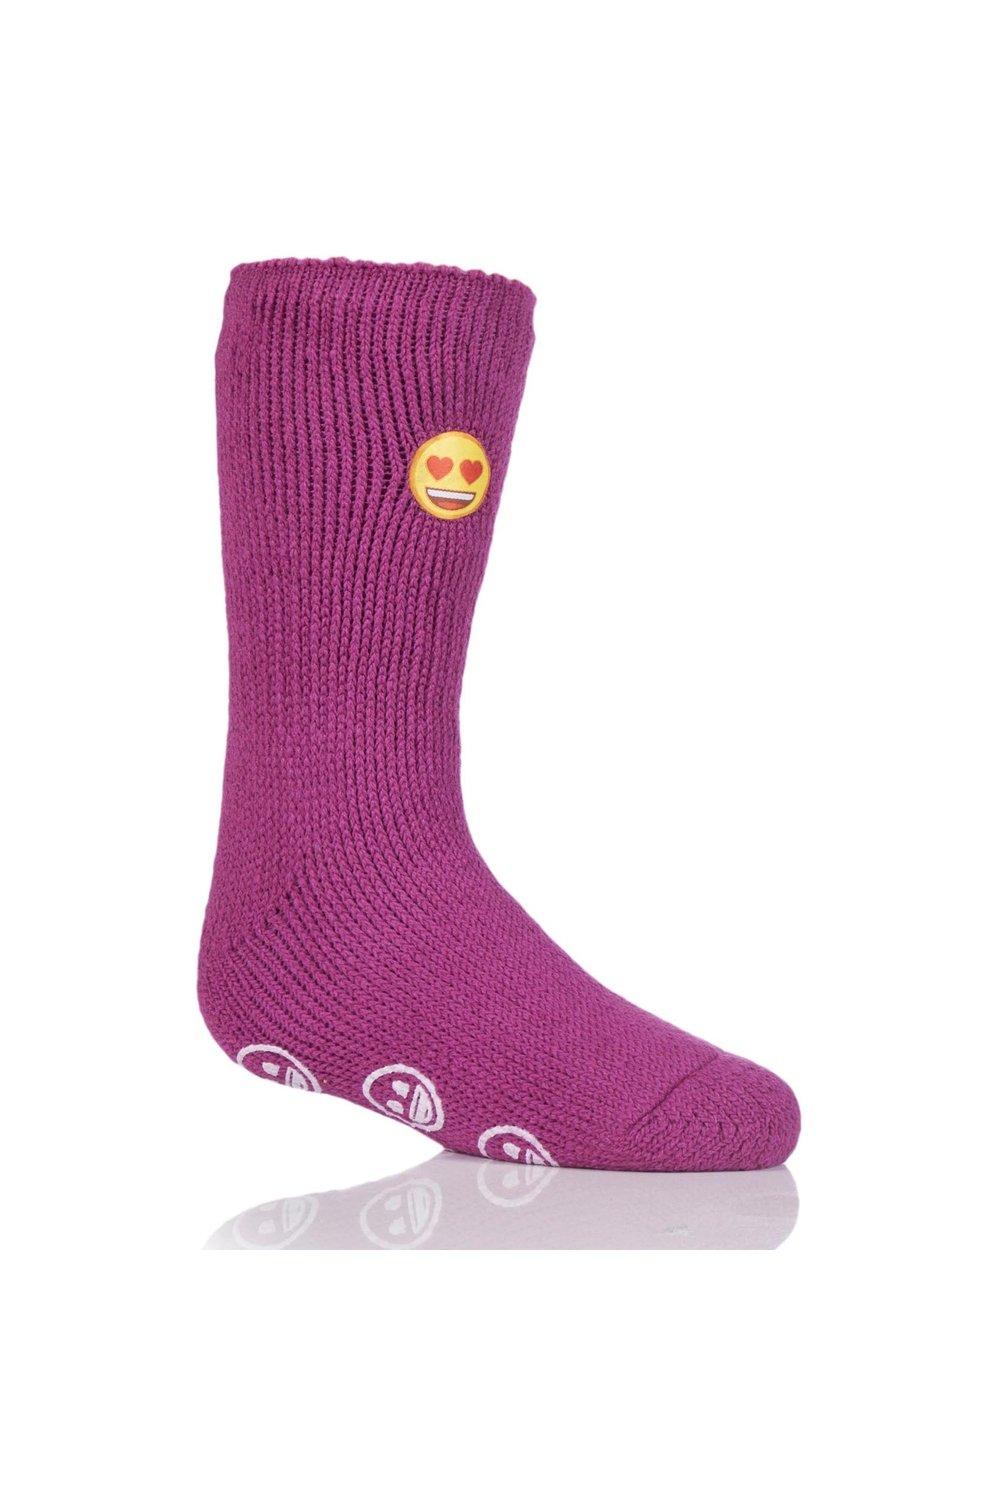 1 Pair Emoji Heart Face Slipper Socks